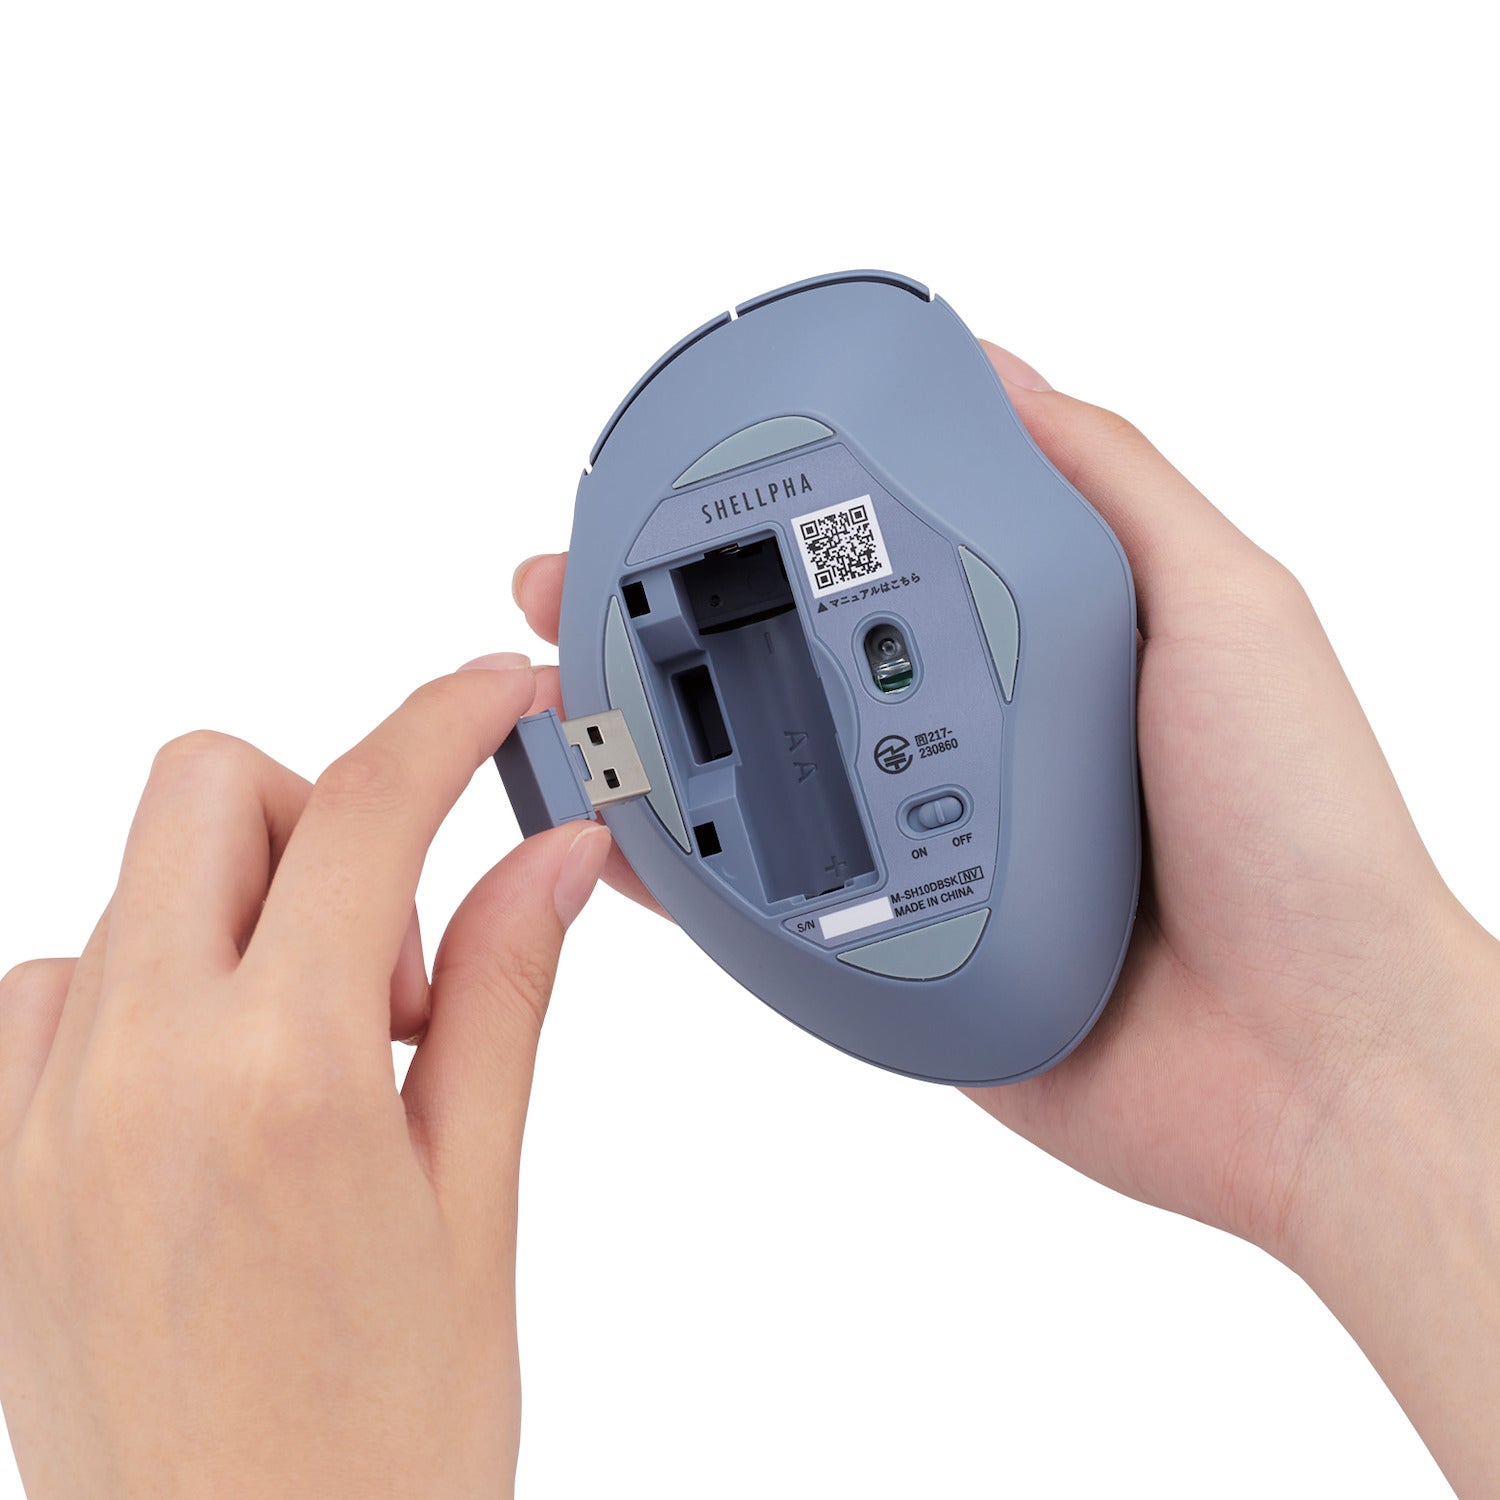 SH10 Ergonomic Mouse - Wireless